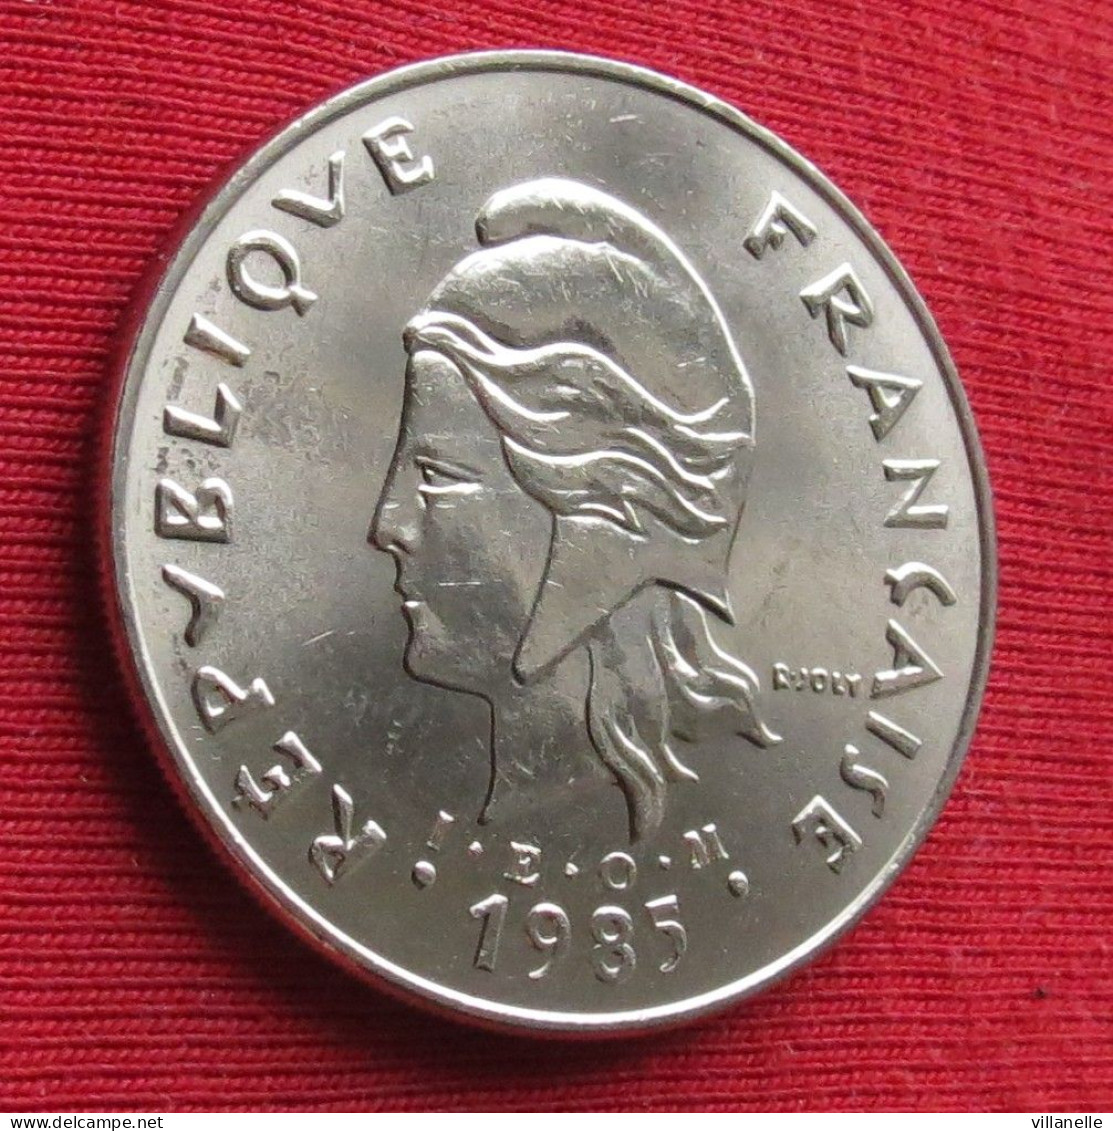 French Polynesia 50 Francs 1985 Polynesie Polinesia  UNC ºº - Polynésie Française